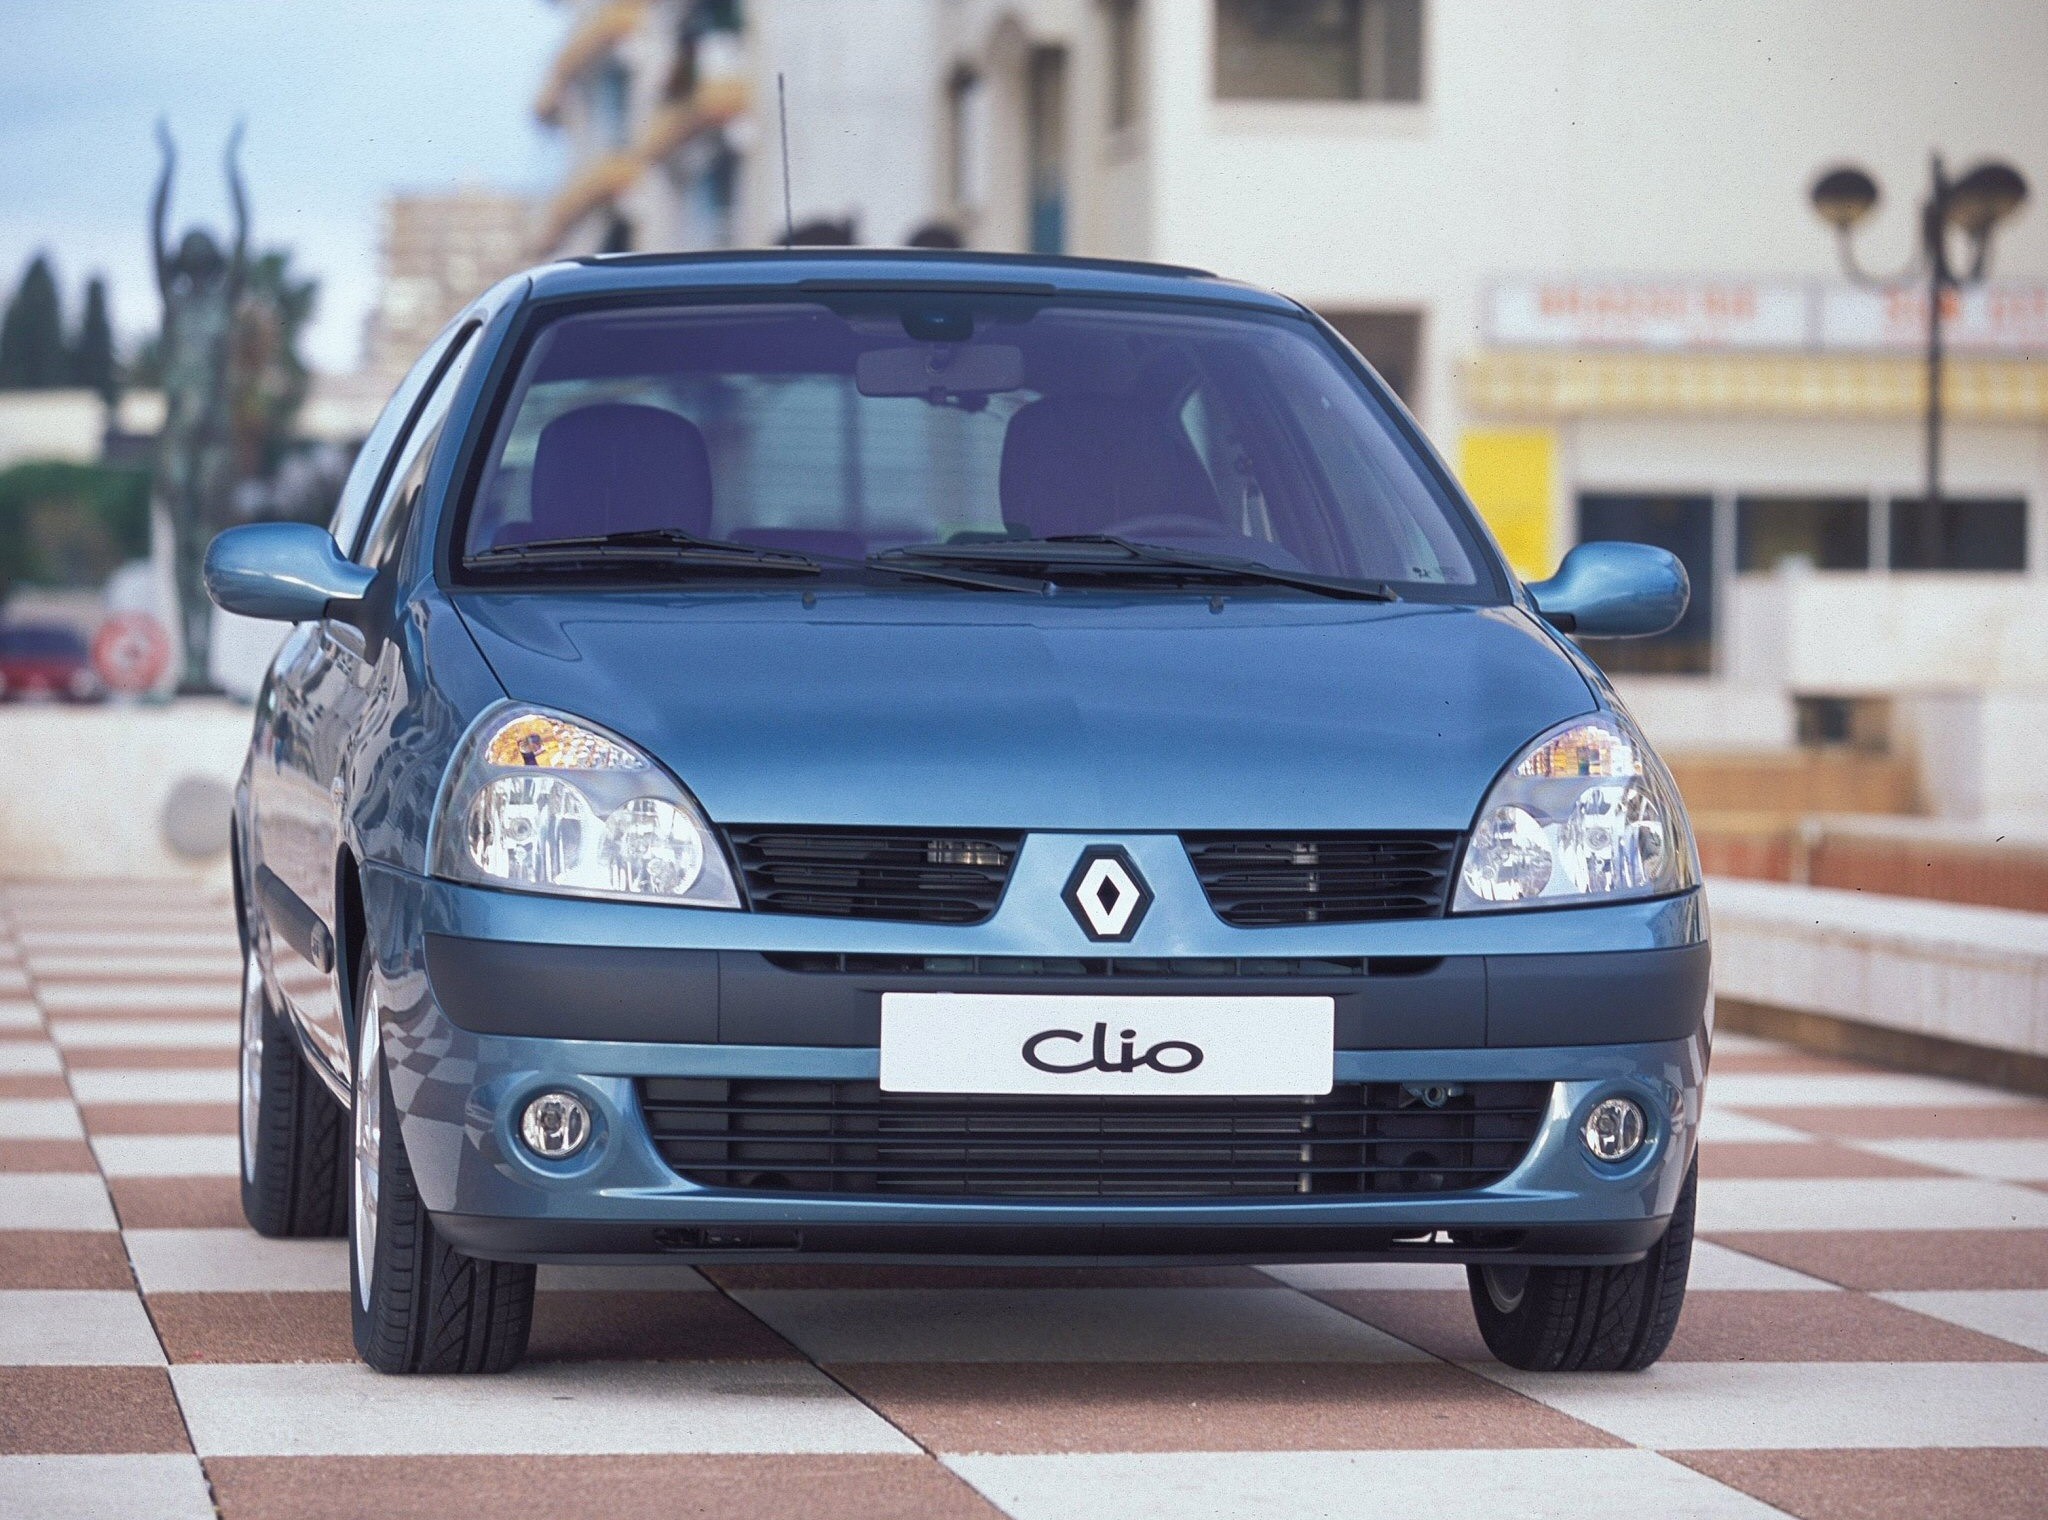 Renault Clio 3-door Hatchback generation BB/CB Phase I 1.2 Manual, 5-speed